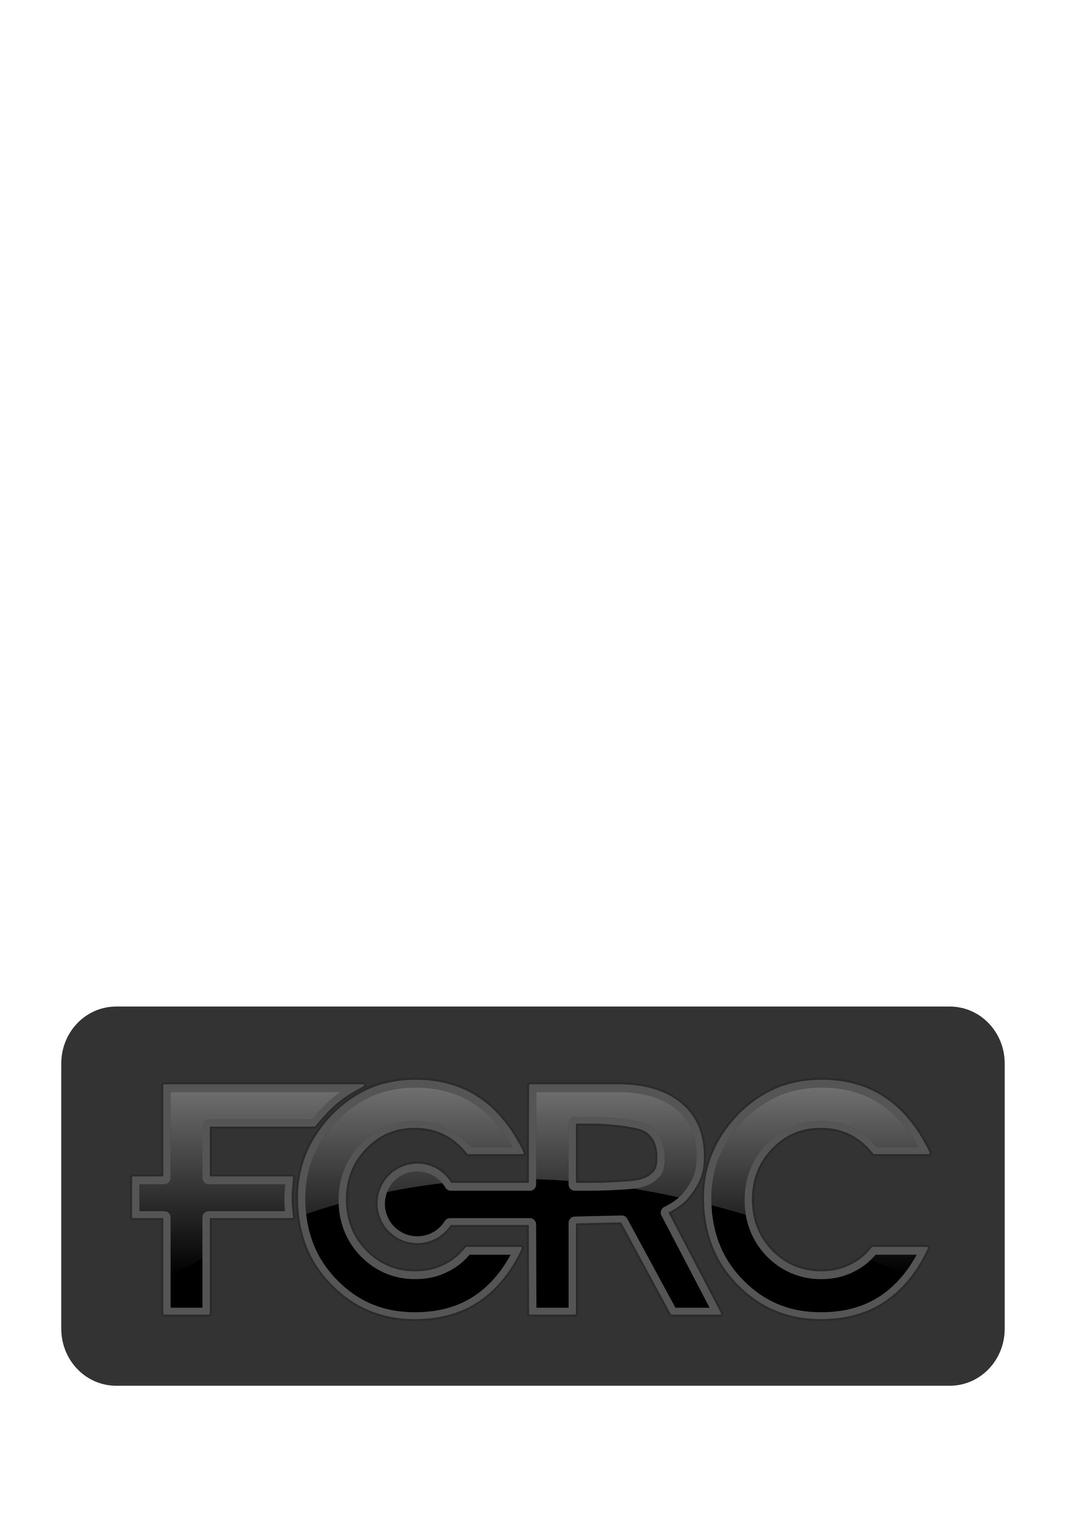 FCRC logo text 1 png transparent